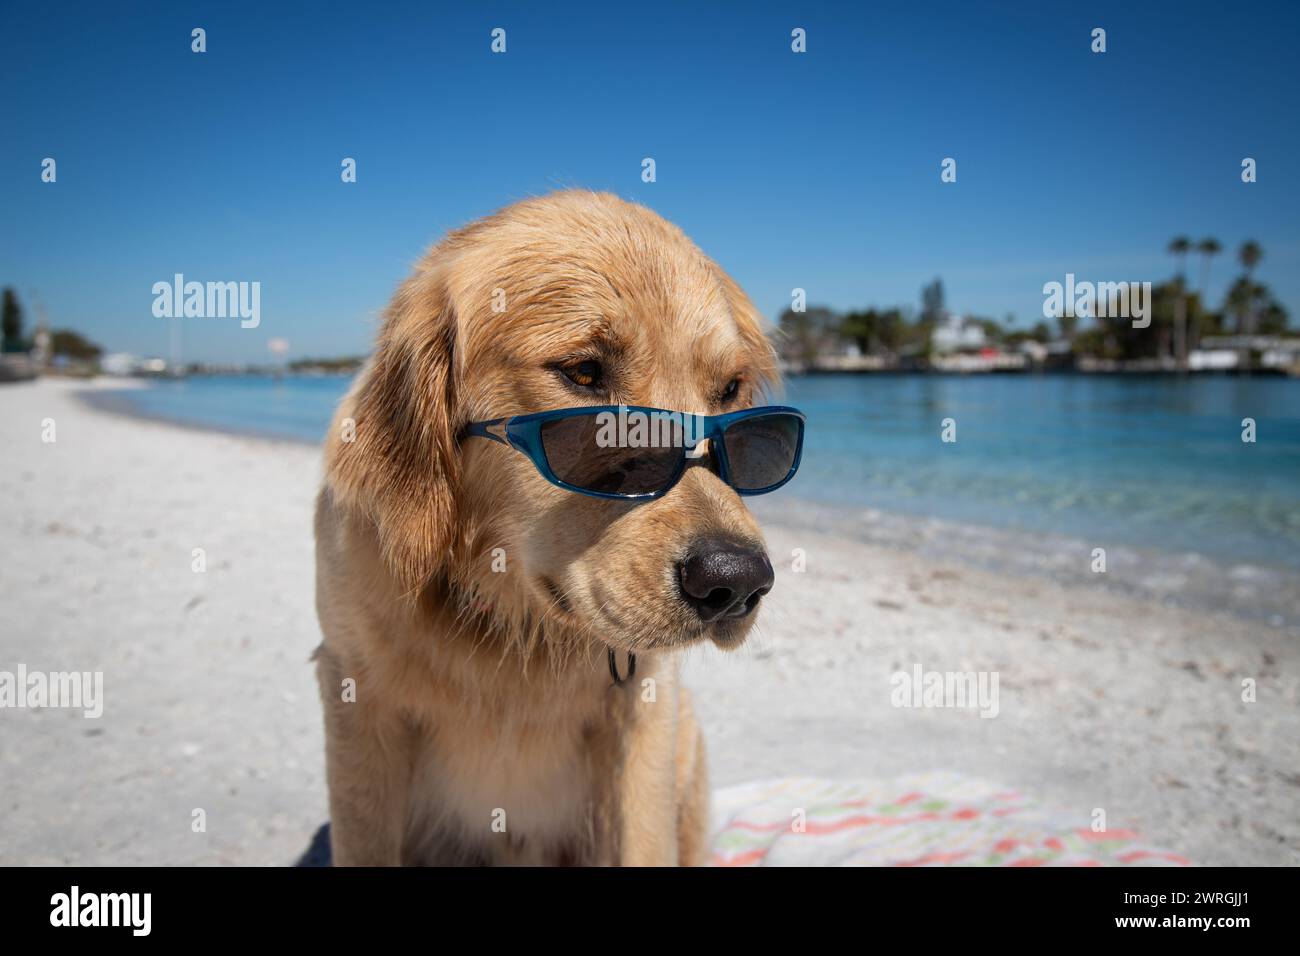 Golden retriever wearing sunglasses sitting on beach, Florida, USA Stock Photo